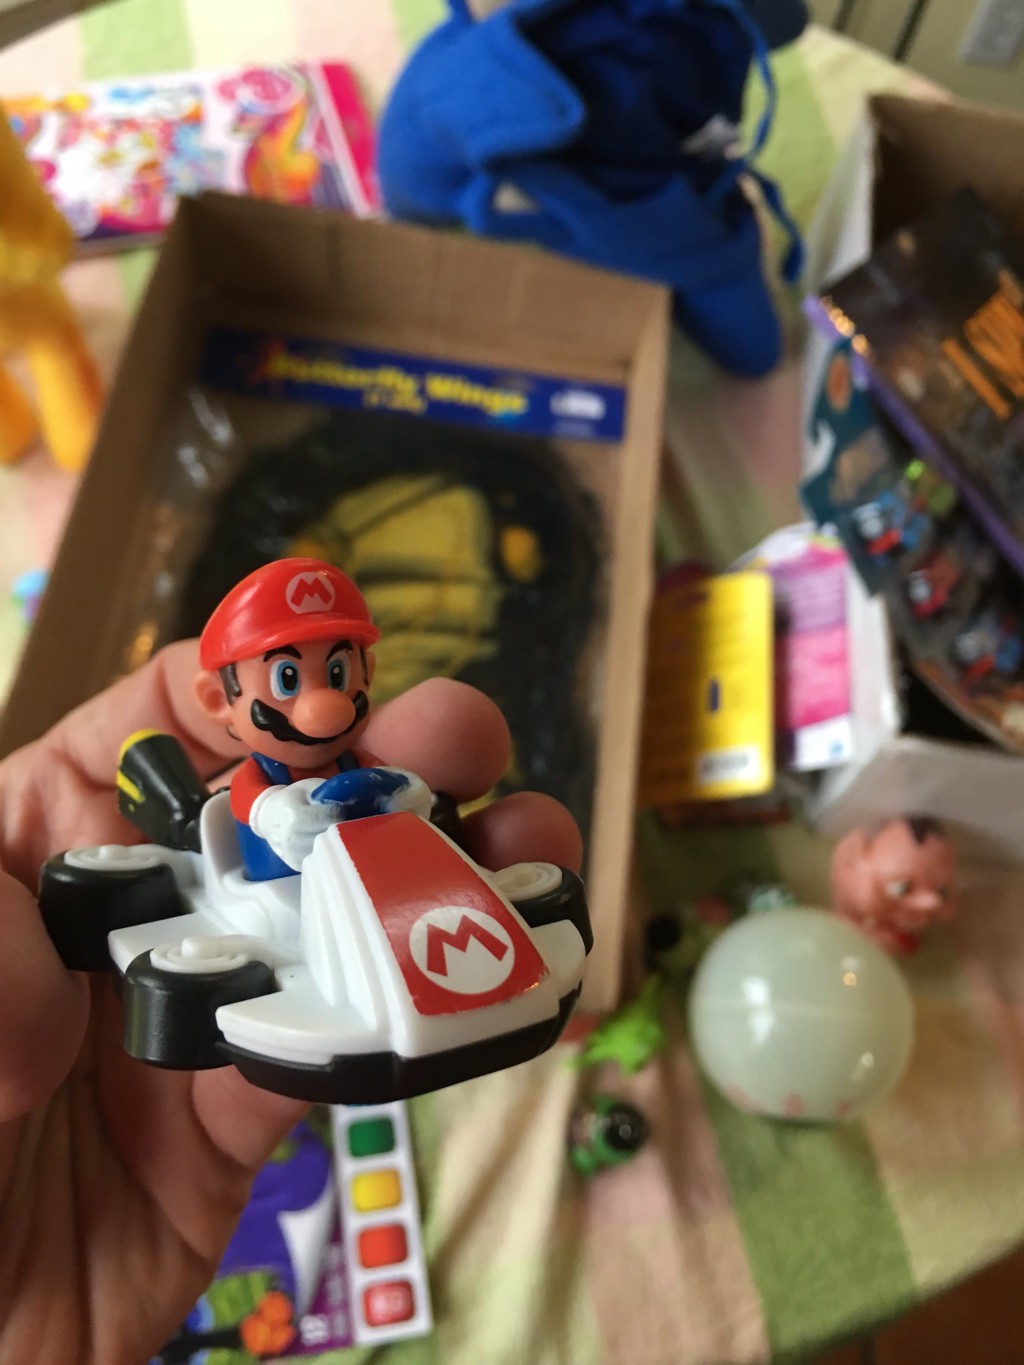 Mario Kart Racer